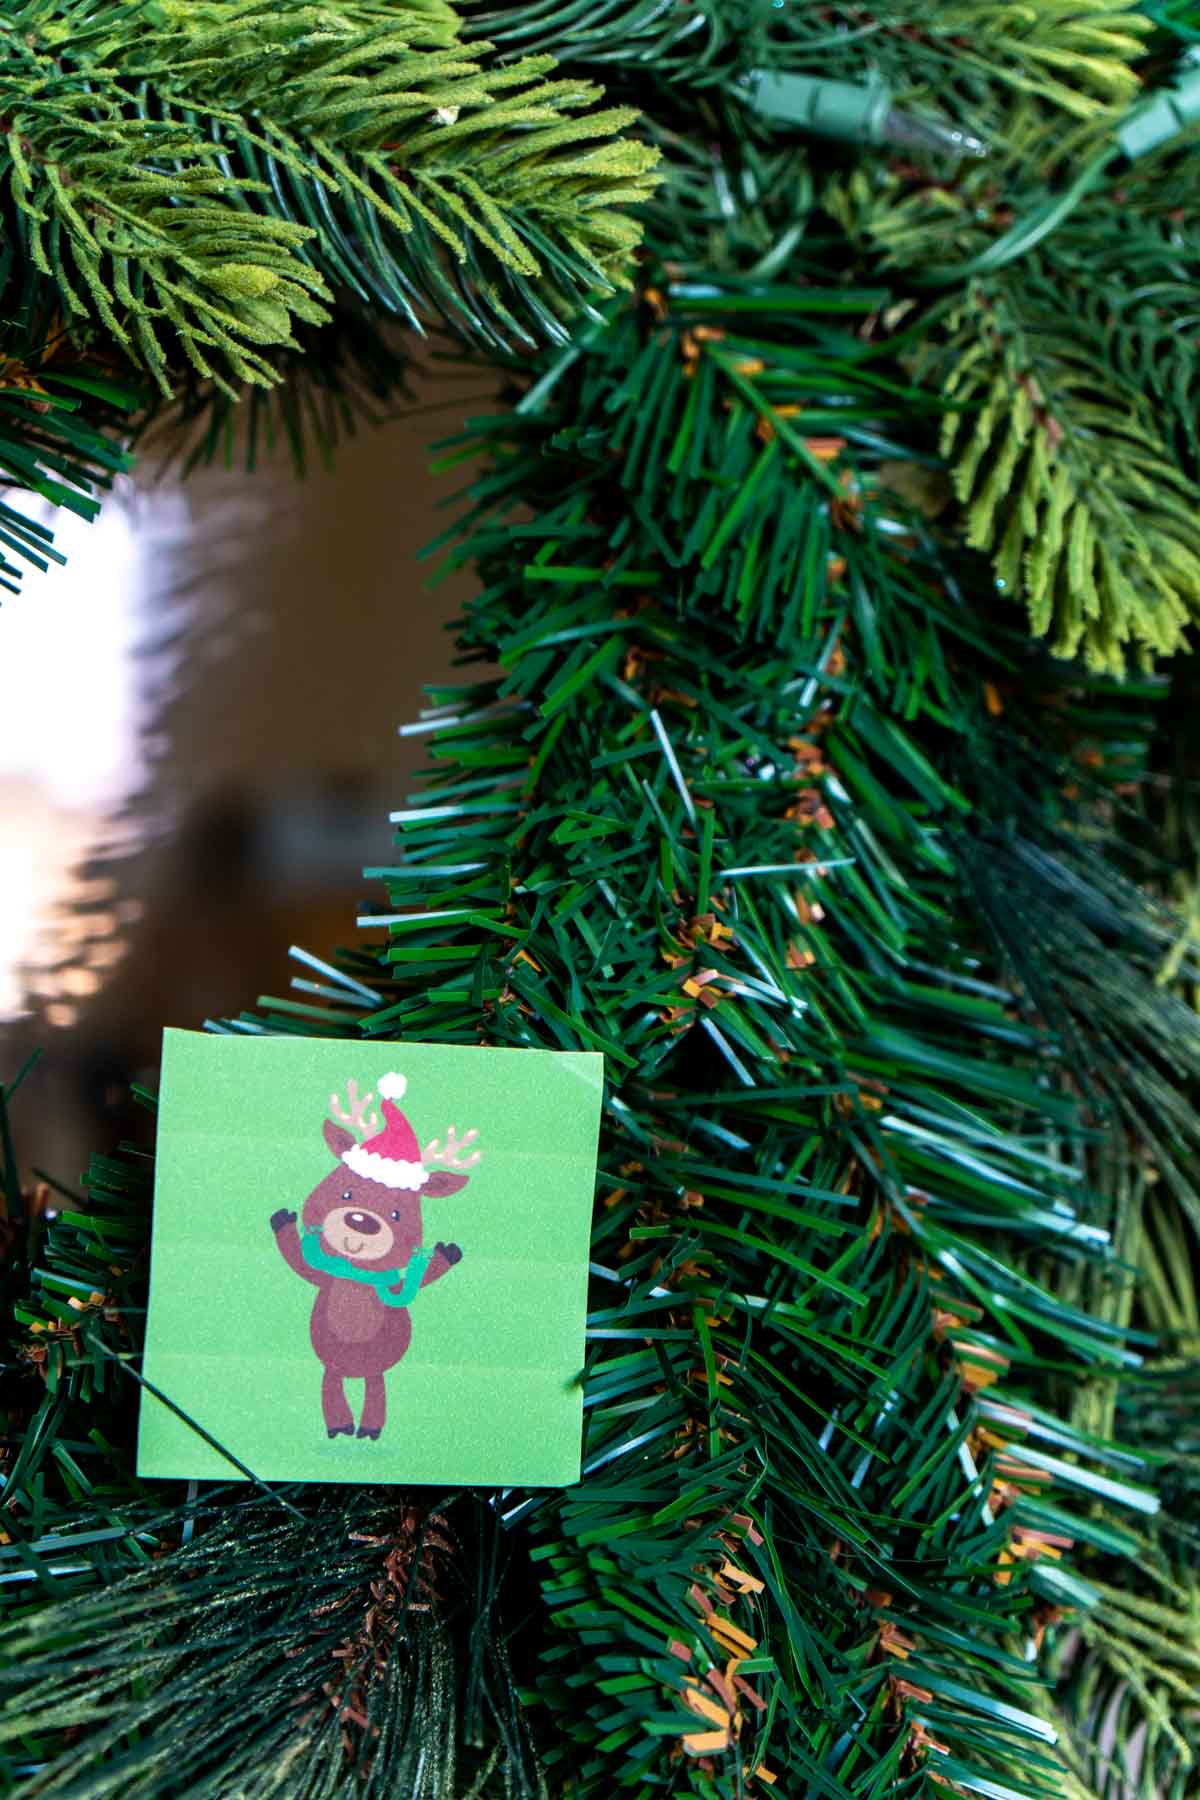 Reindeer card hidden on a wreath